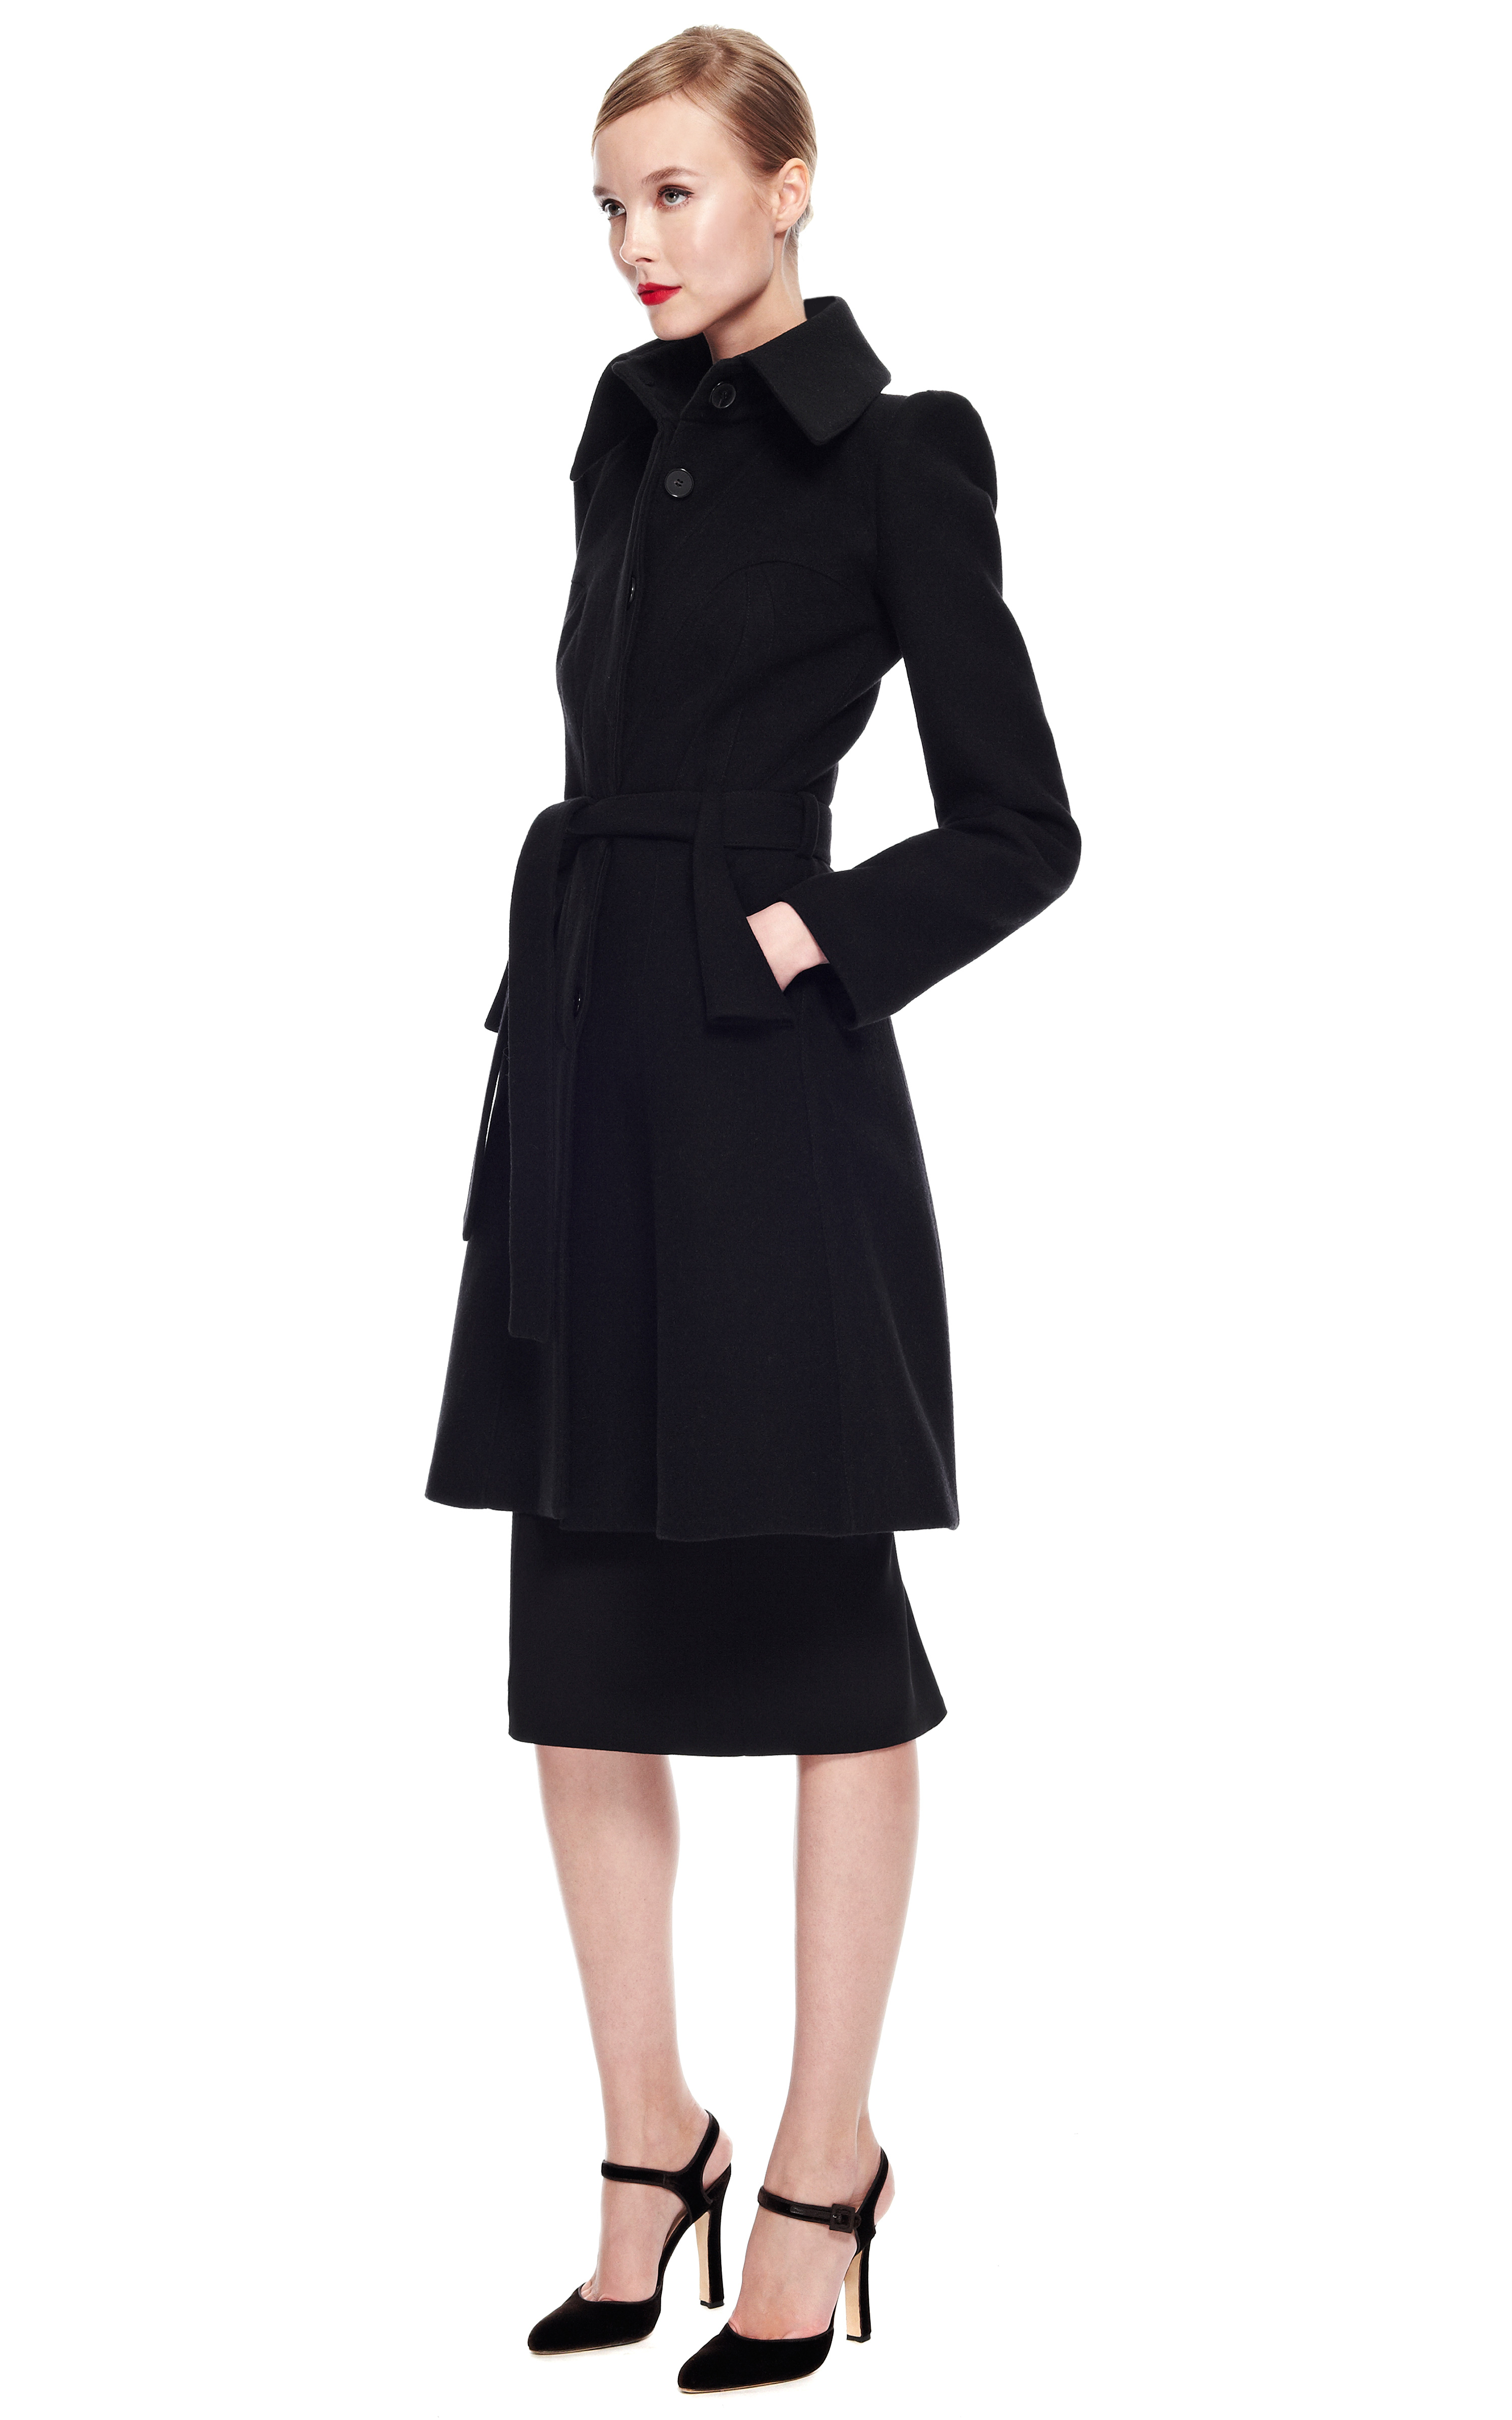 Zac posen Cashmere Wool Coating Dress Coat in Black | Lyst